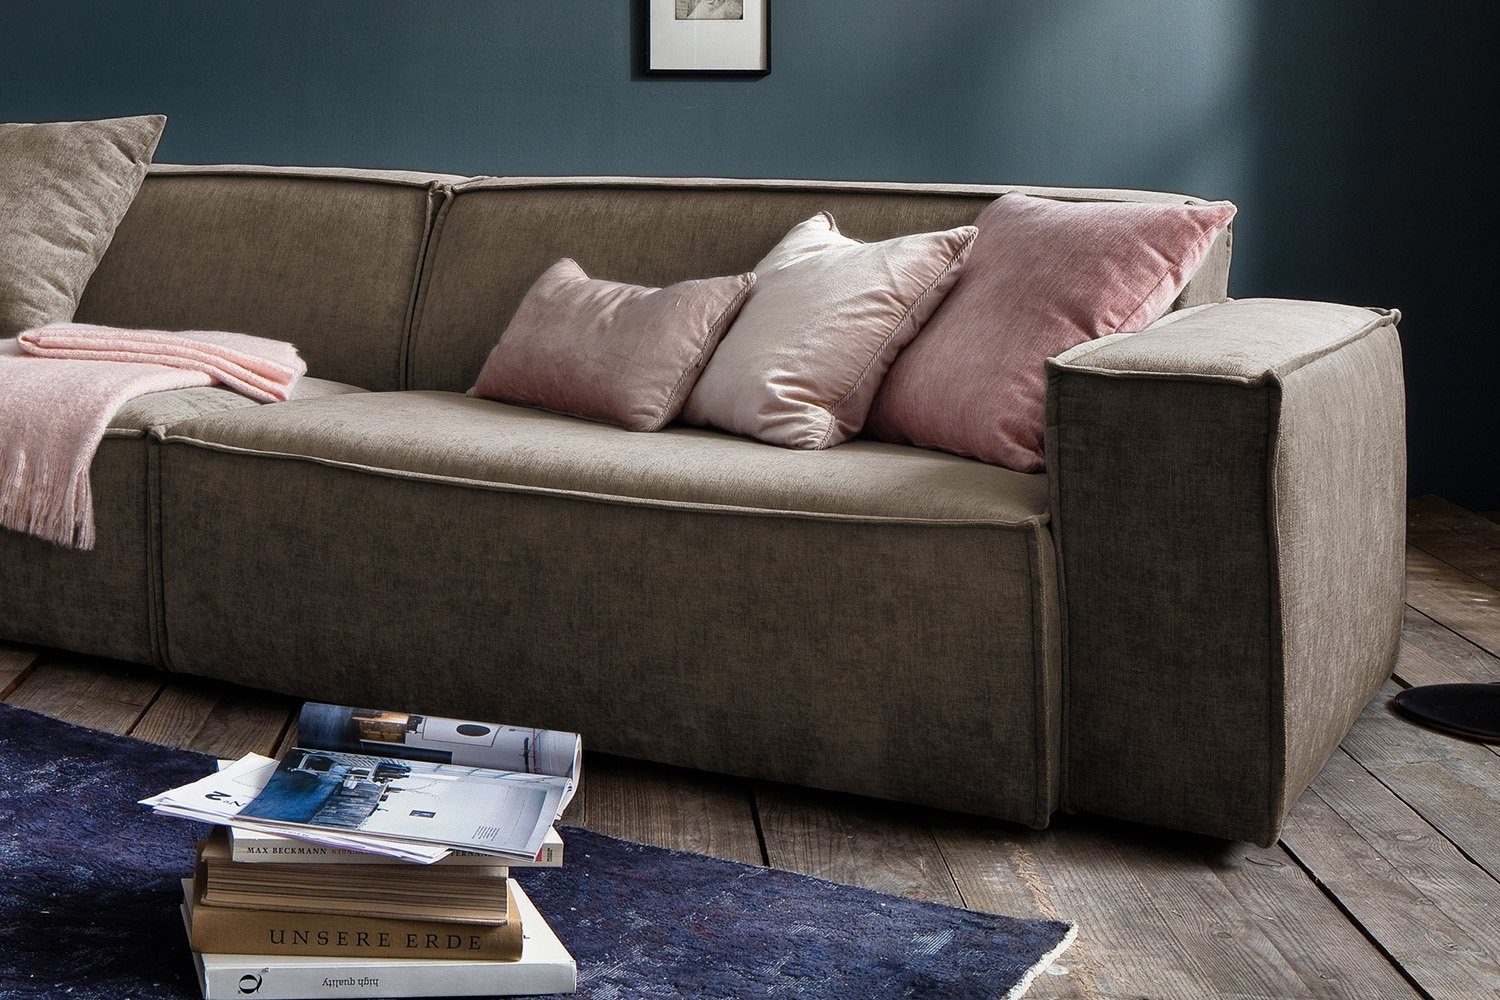 Farben verschiedene KAWOLA dunkelbraun SAMU, Stoff Riesensofa Sofa